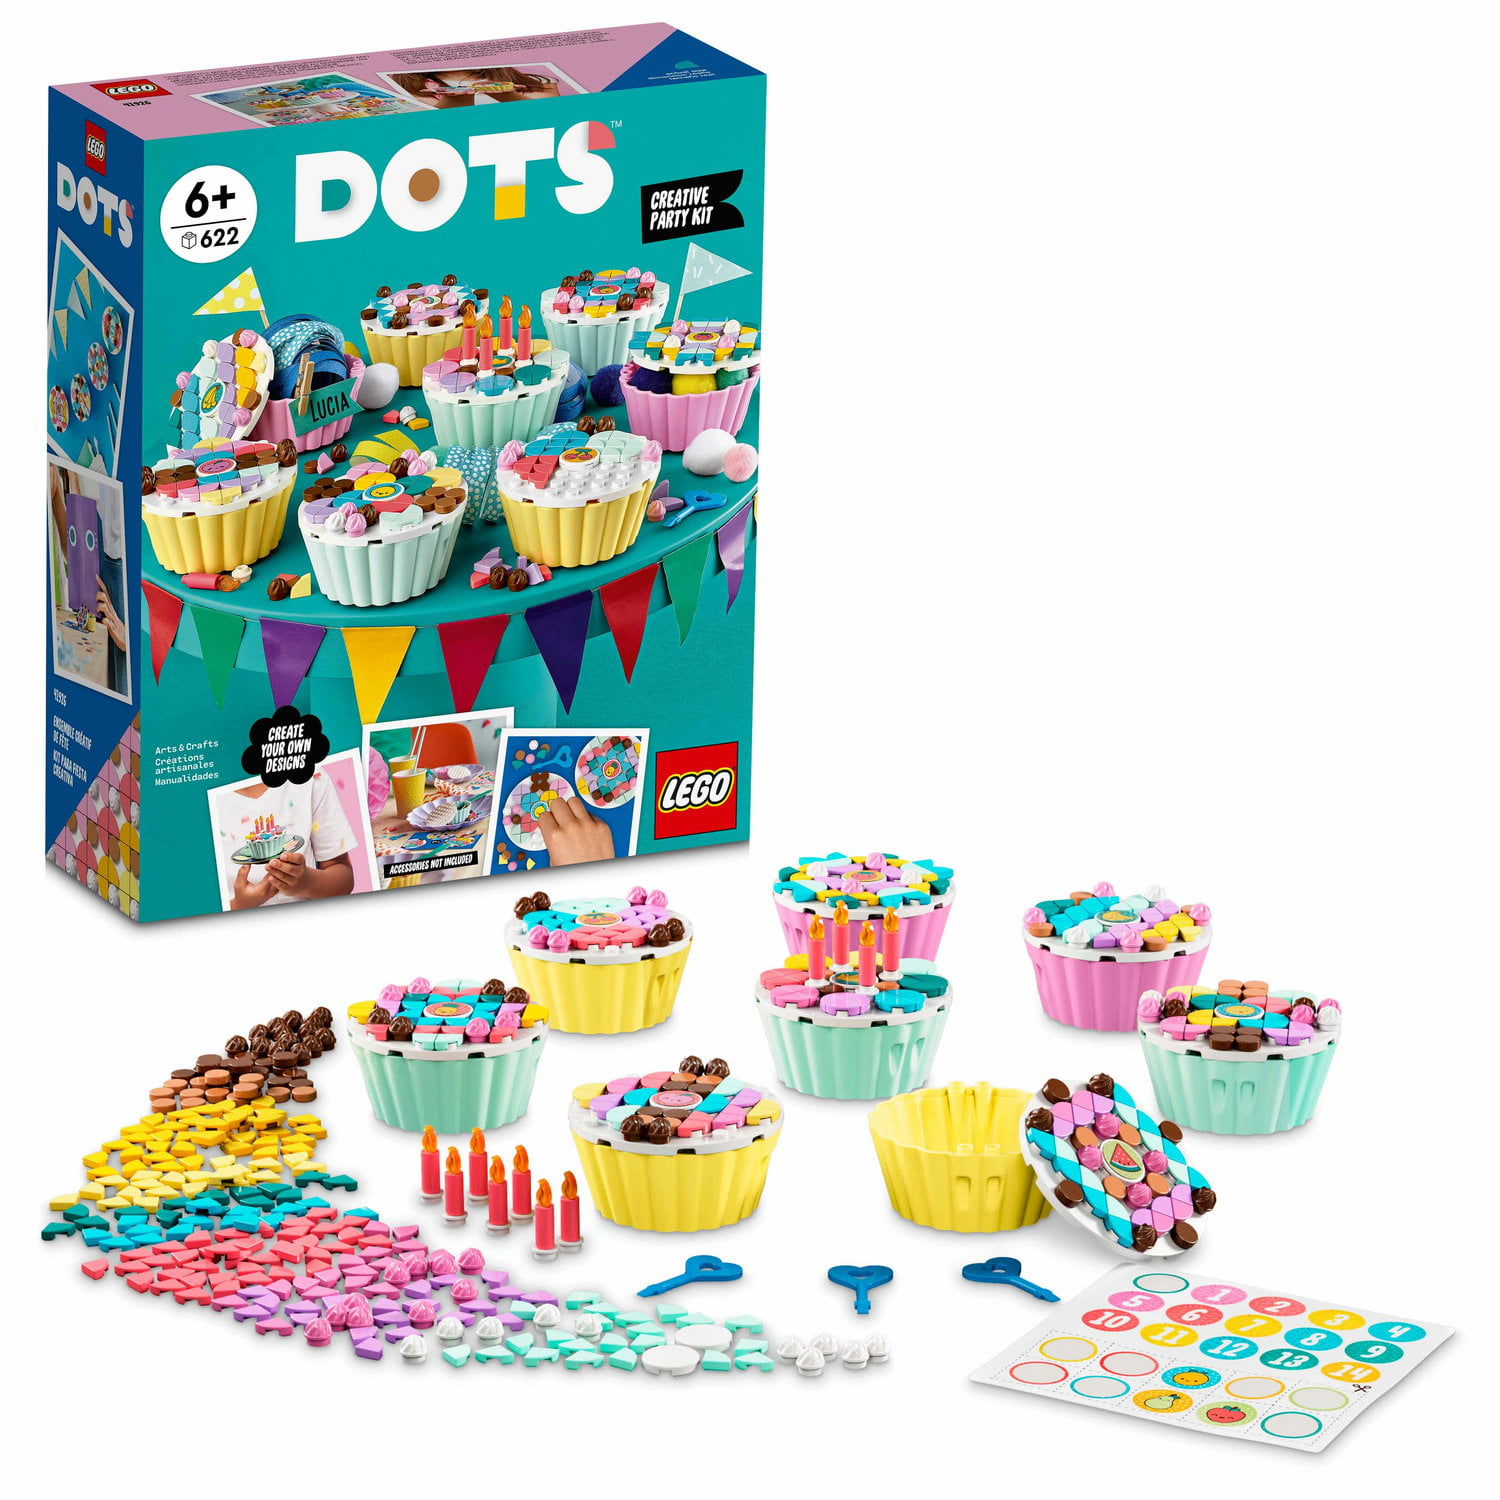 Paint Decorate Unicorn Colour Style Craft Kit Fun Play Set Kids Personalise Toy